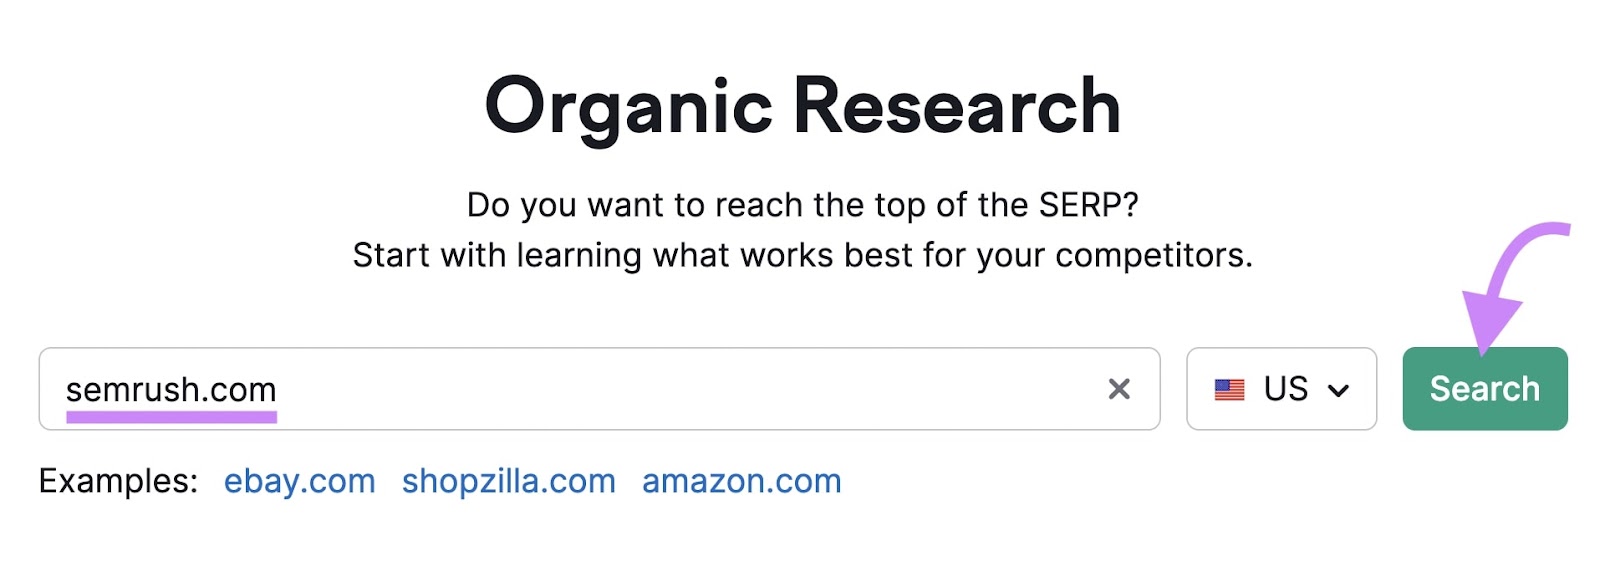 "semrush.com" entered into Organic Research search bar